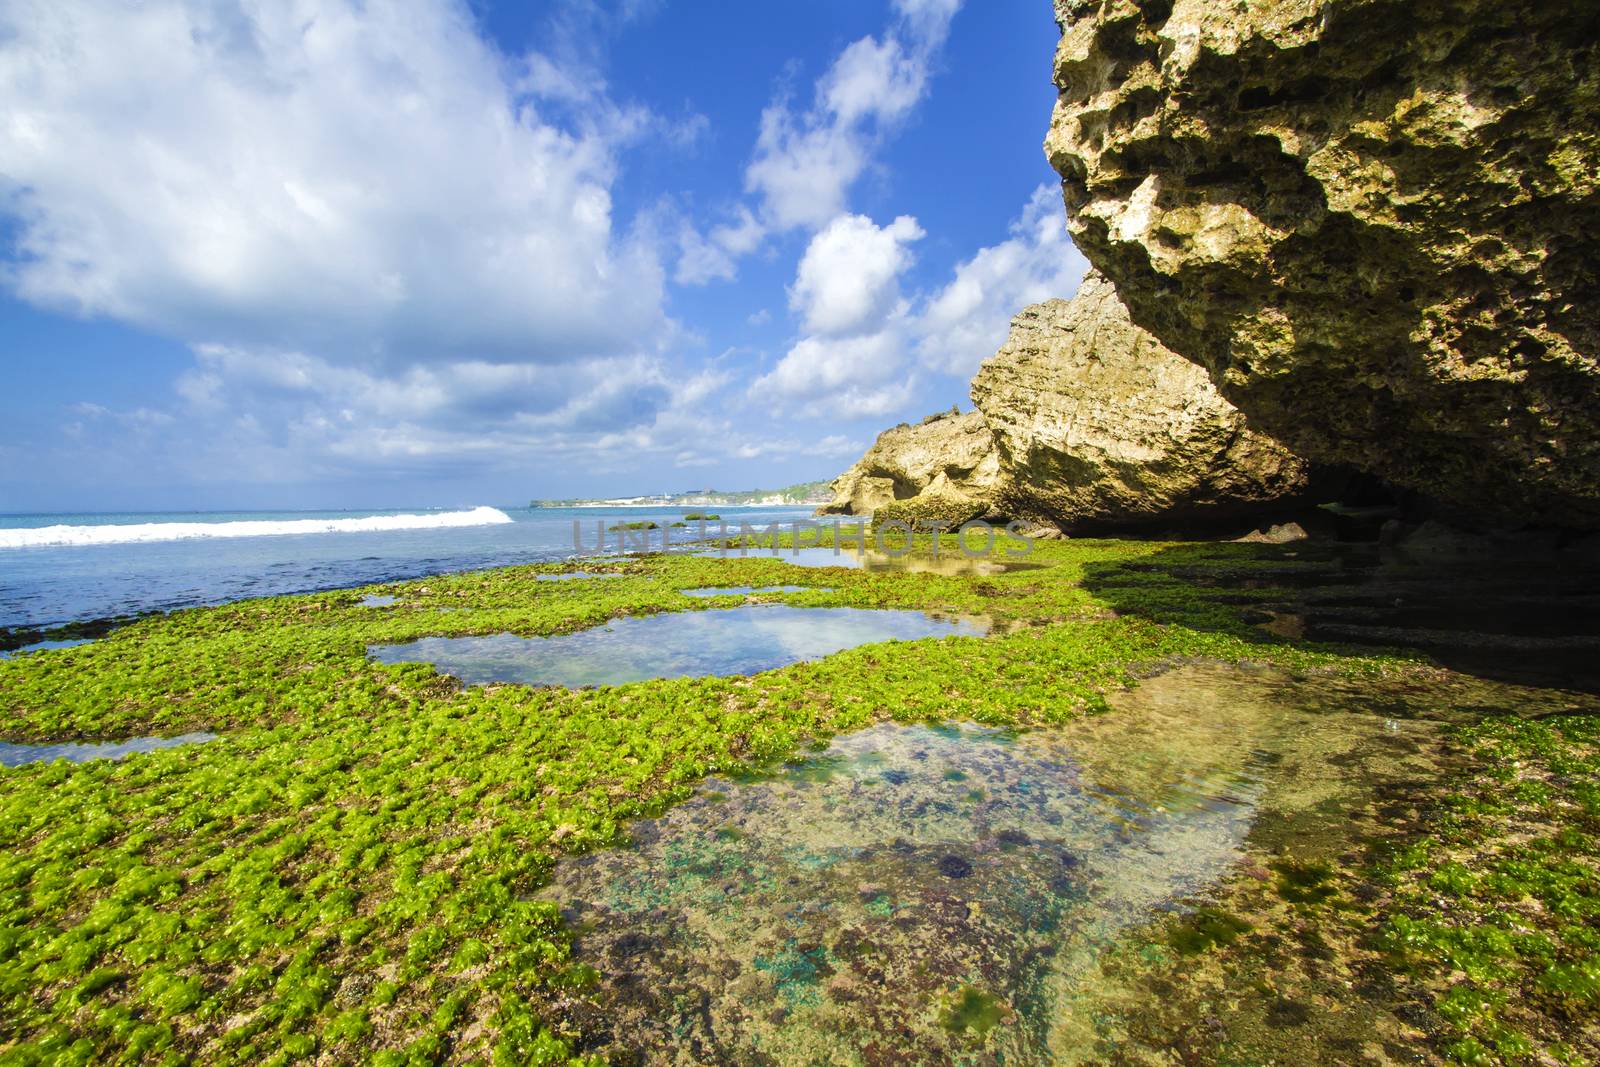 Ocean coastline, Bali, Indonesia.